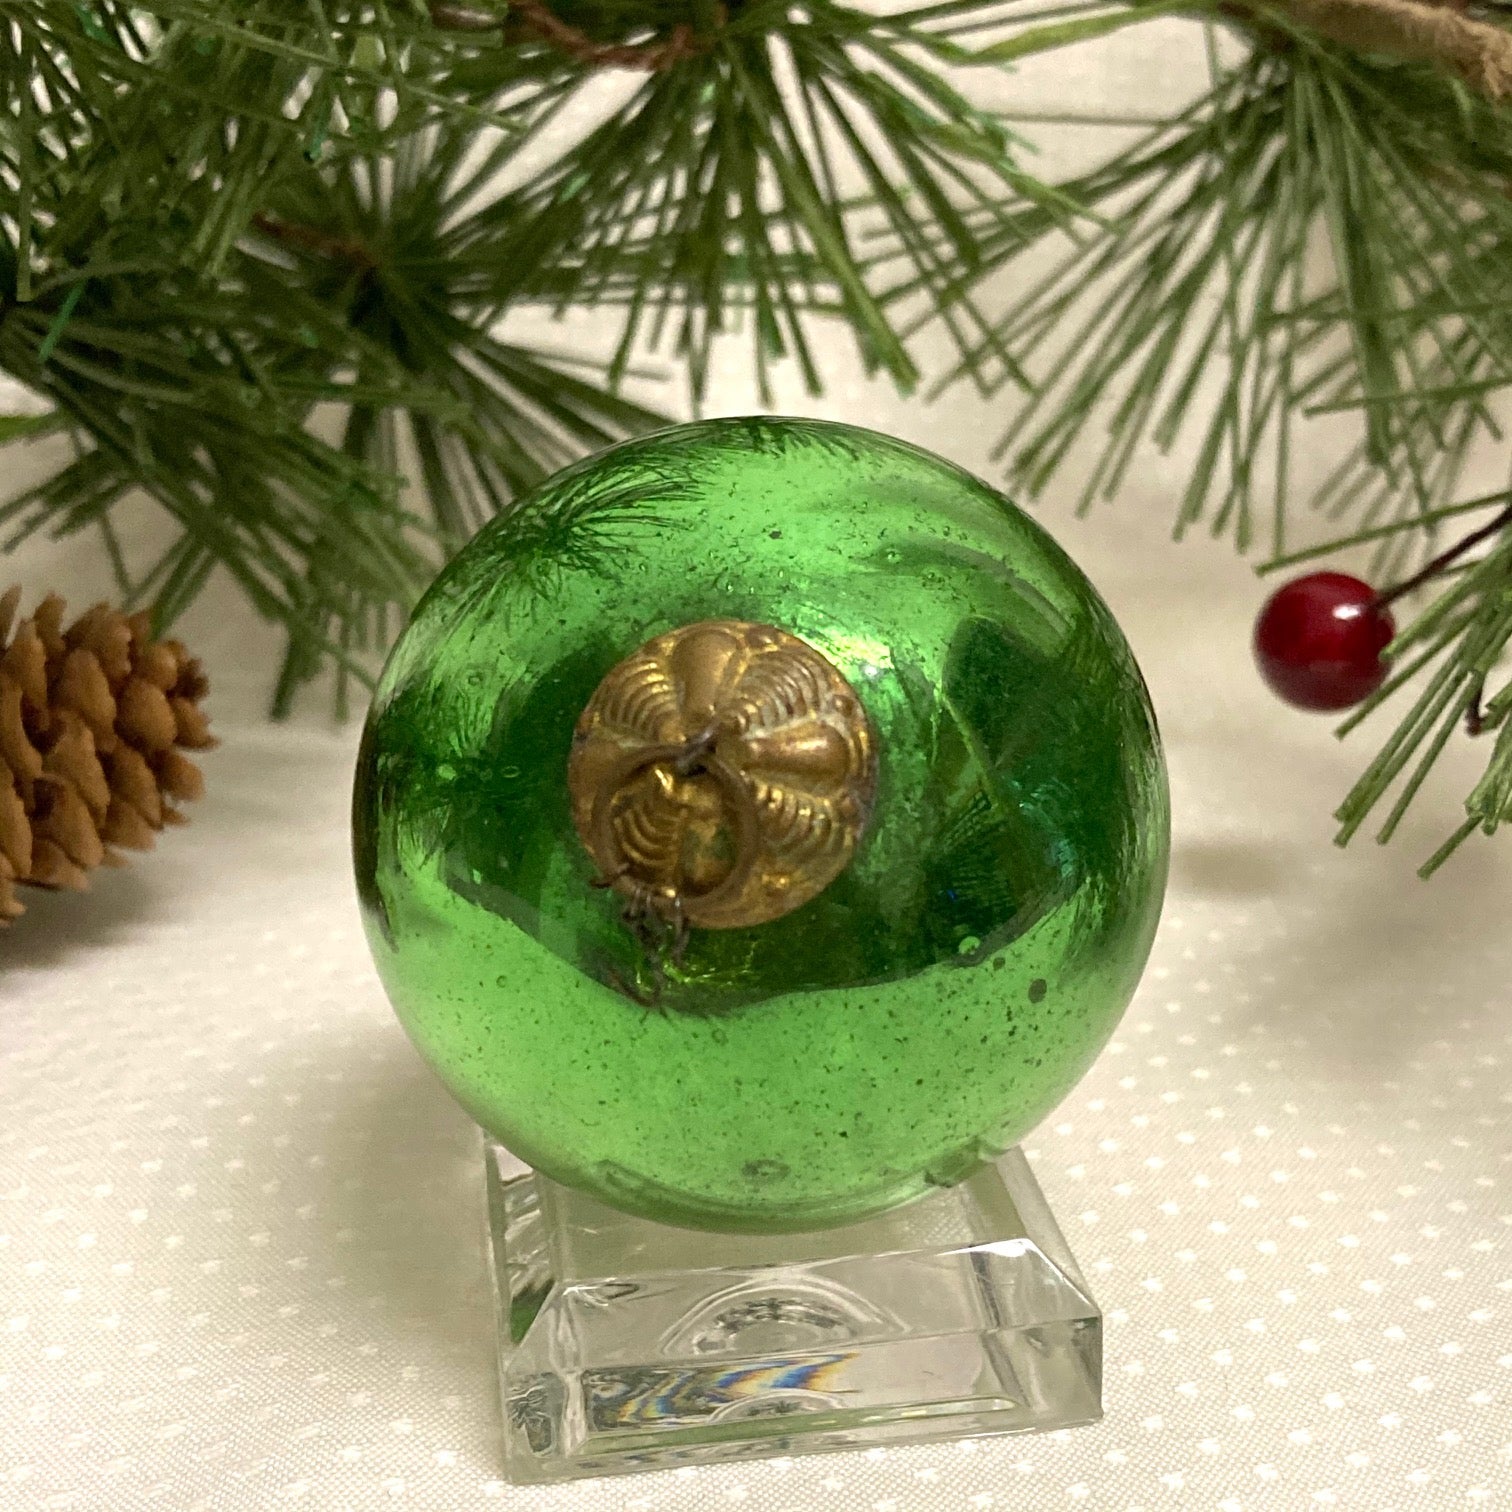 Antique German Kugel Christmas Ornament Green 2"